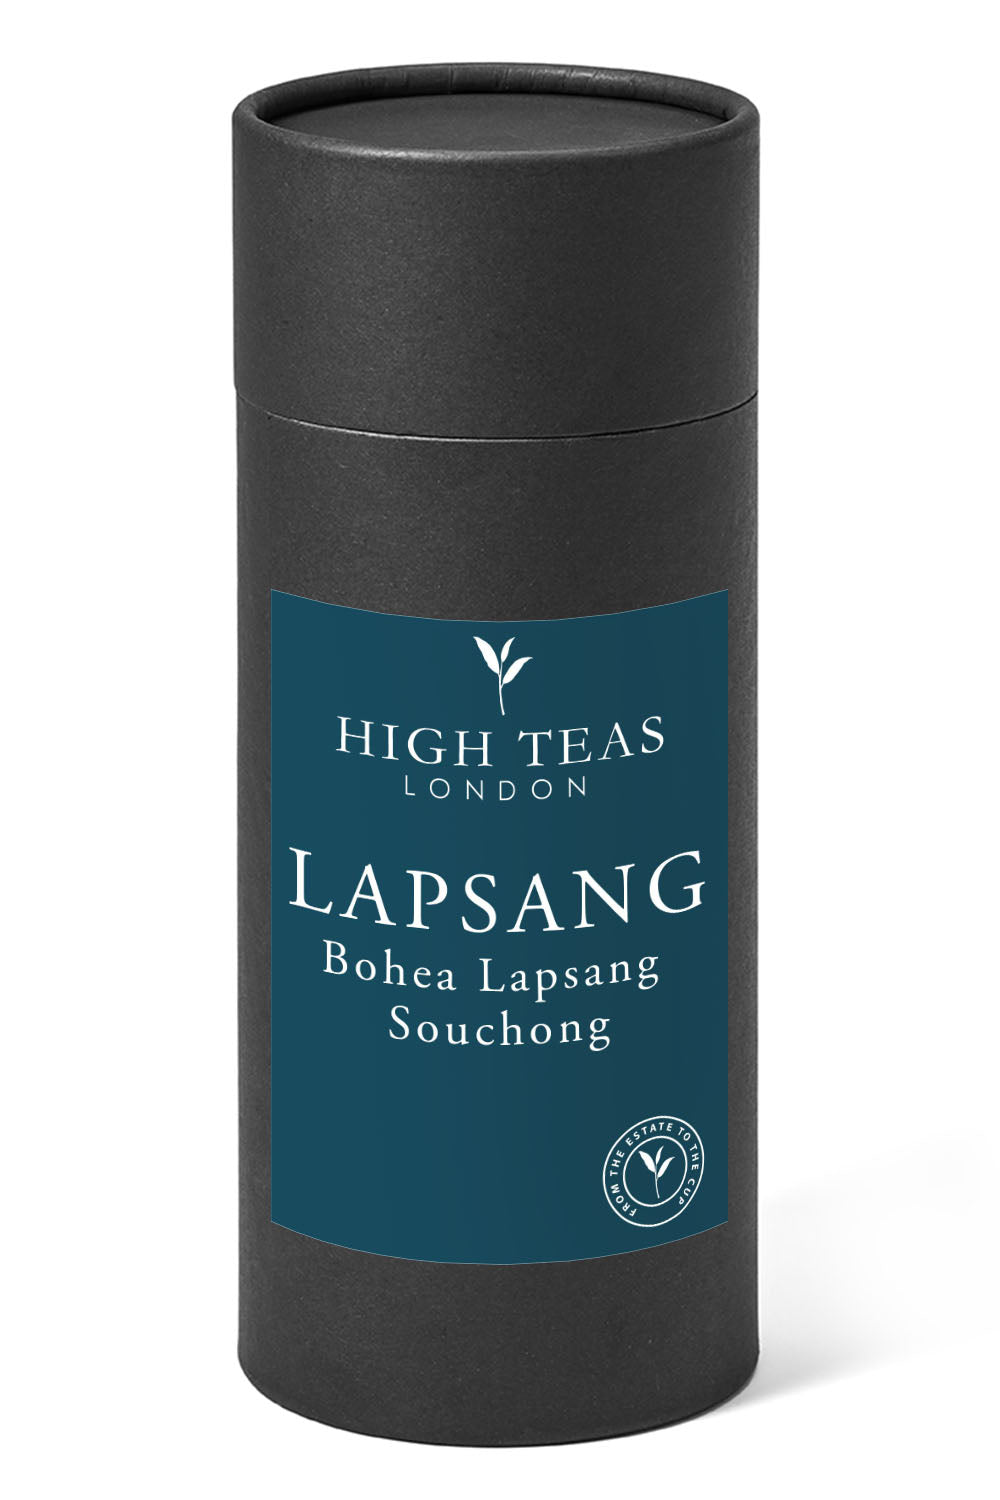 Bohea Lapsang Souchong Black Dragon-150g gift-Loose Leaf Tea-High Teas